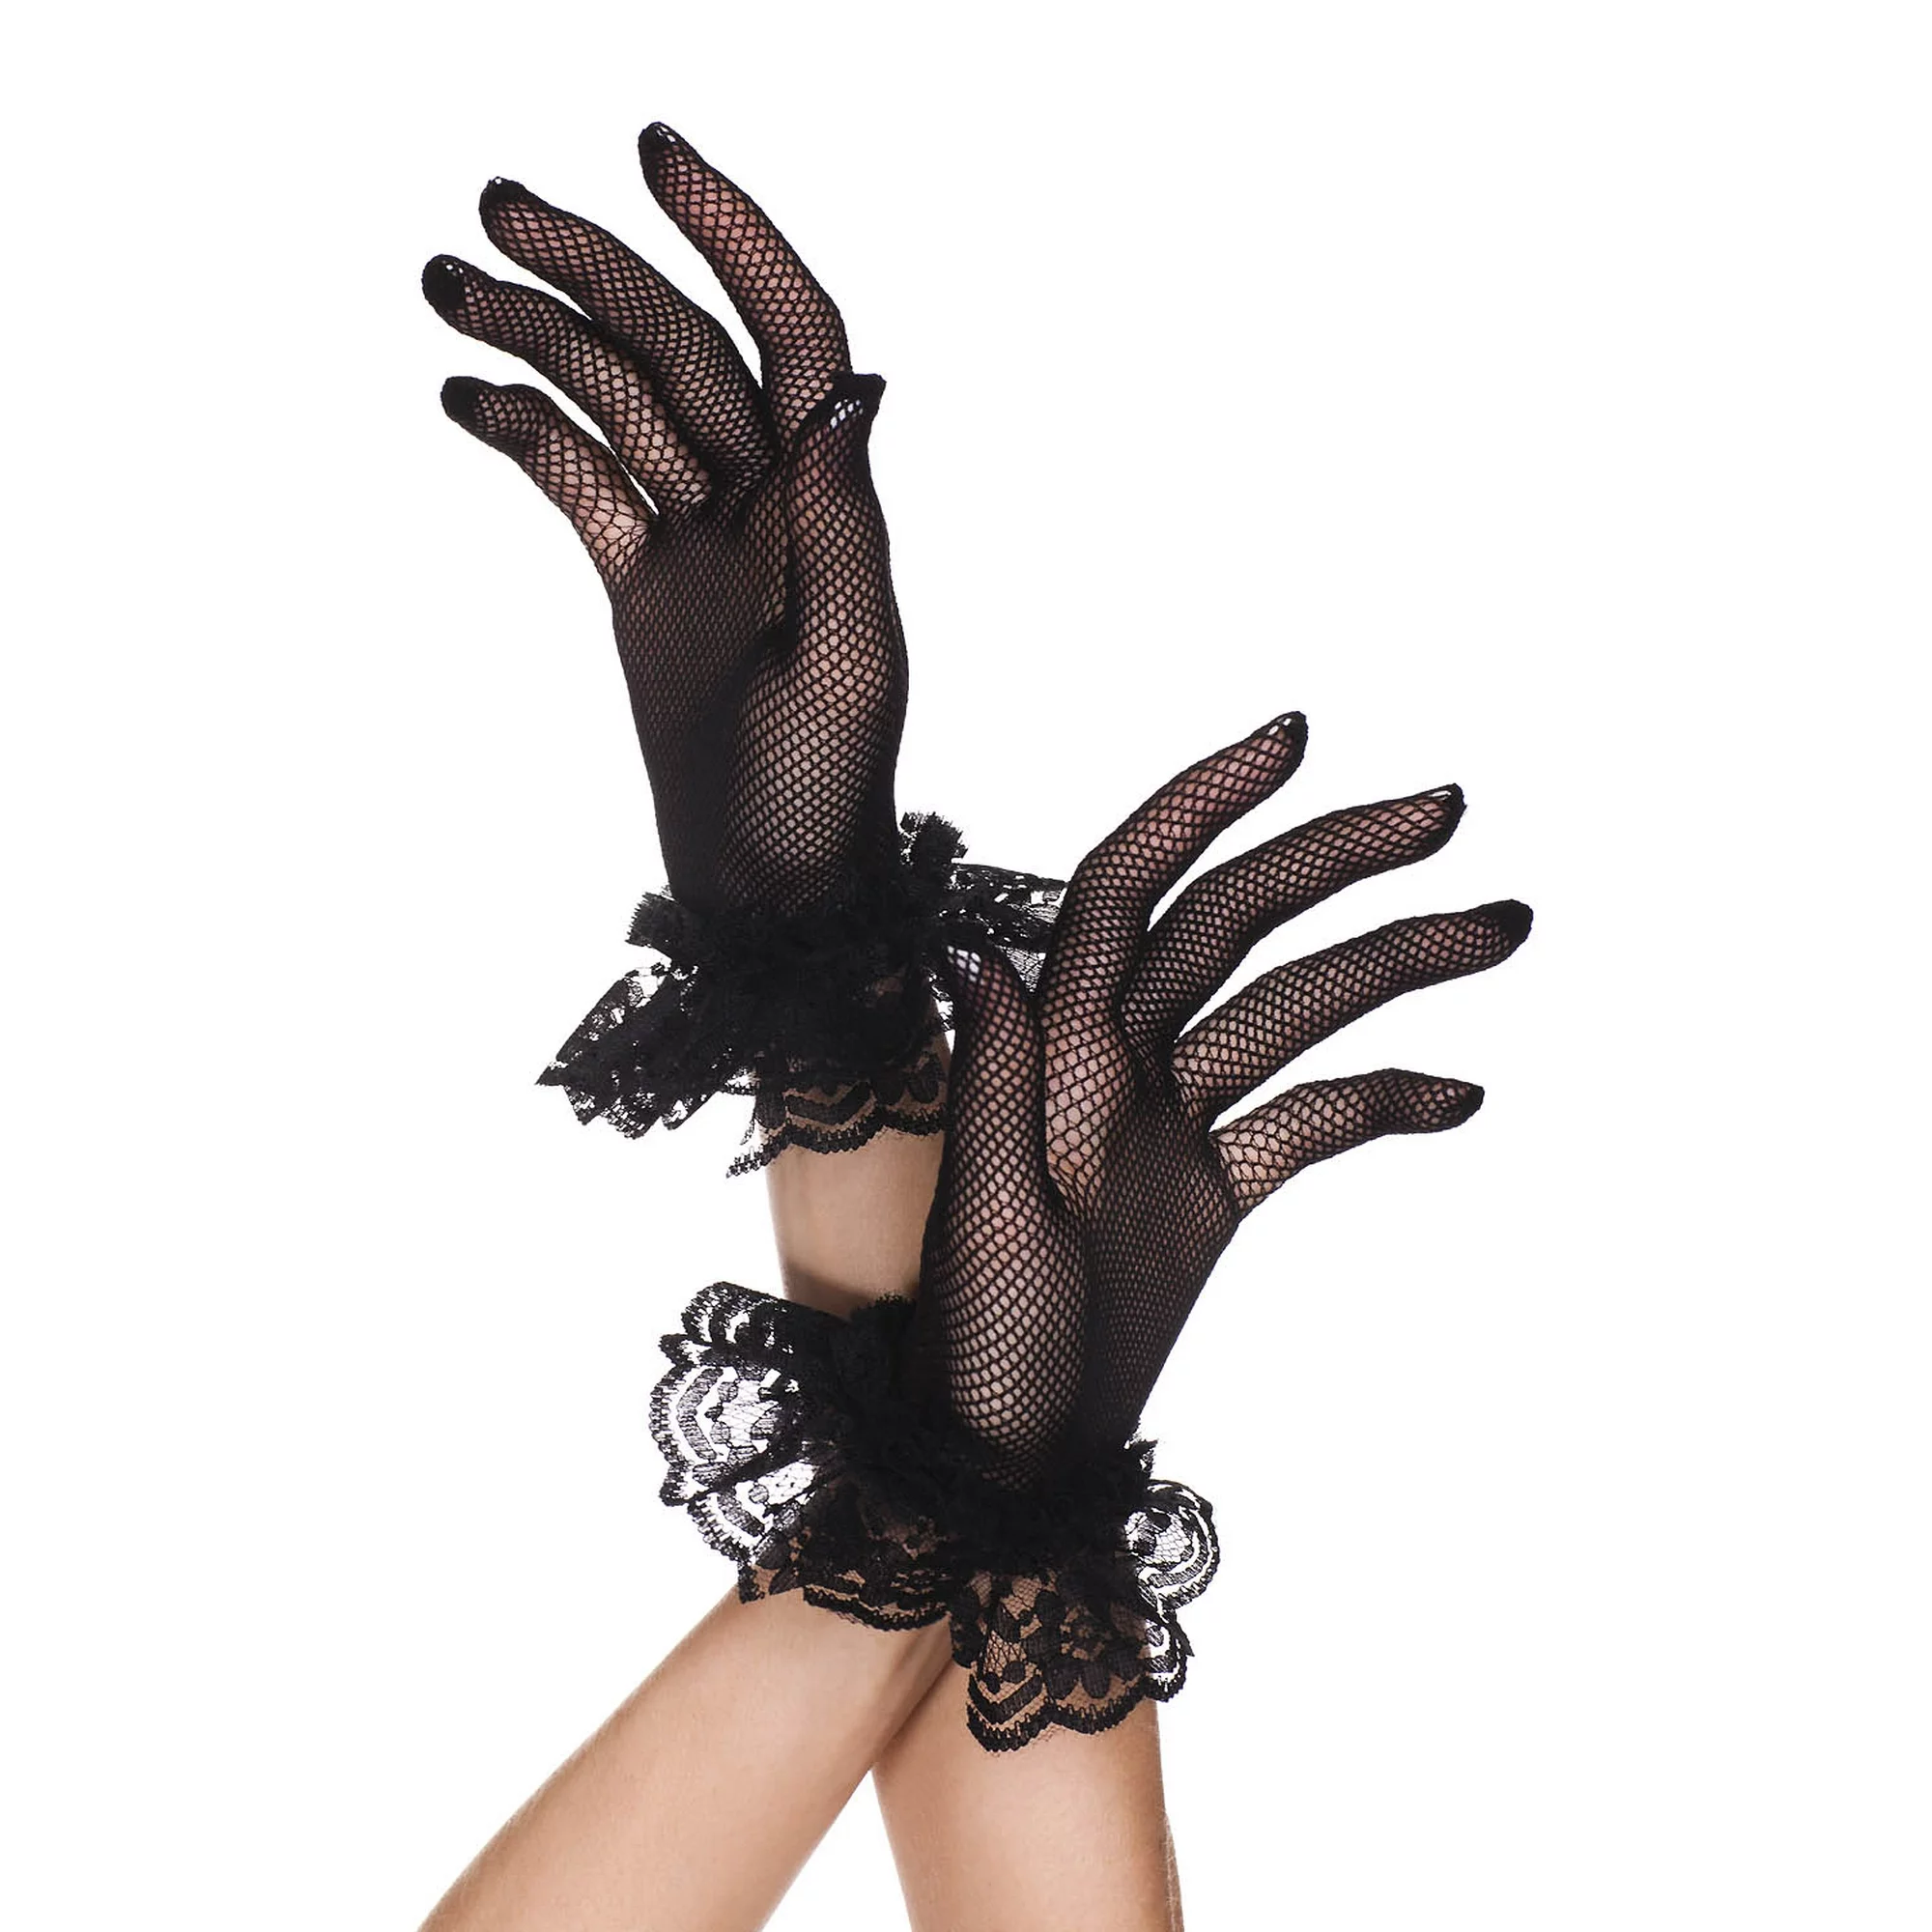 Lace ruffle fishnet gloves